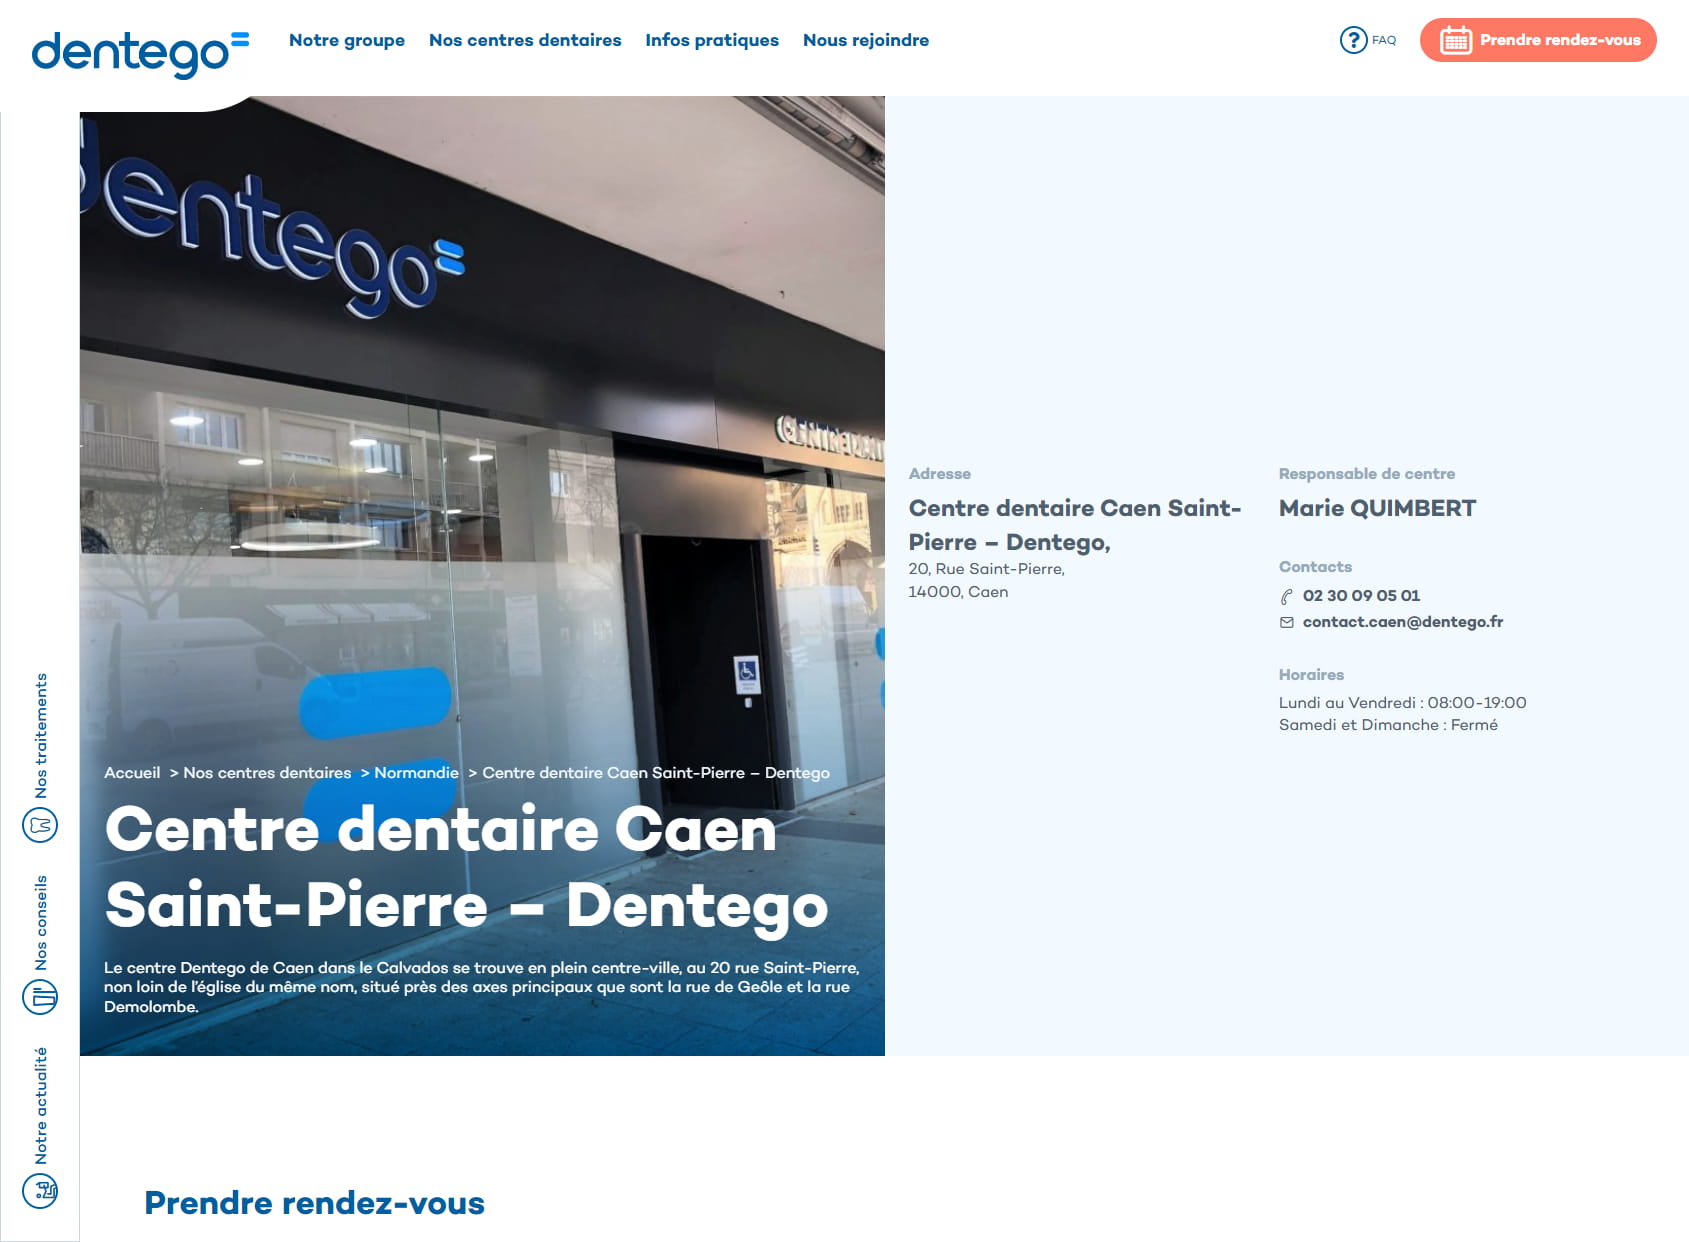 Centre dentaire Caen Saint-Pierre - Dentego